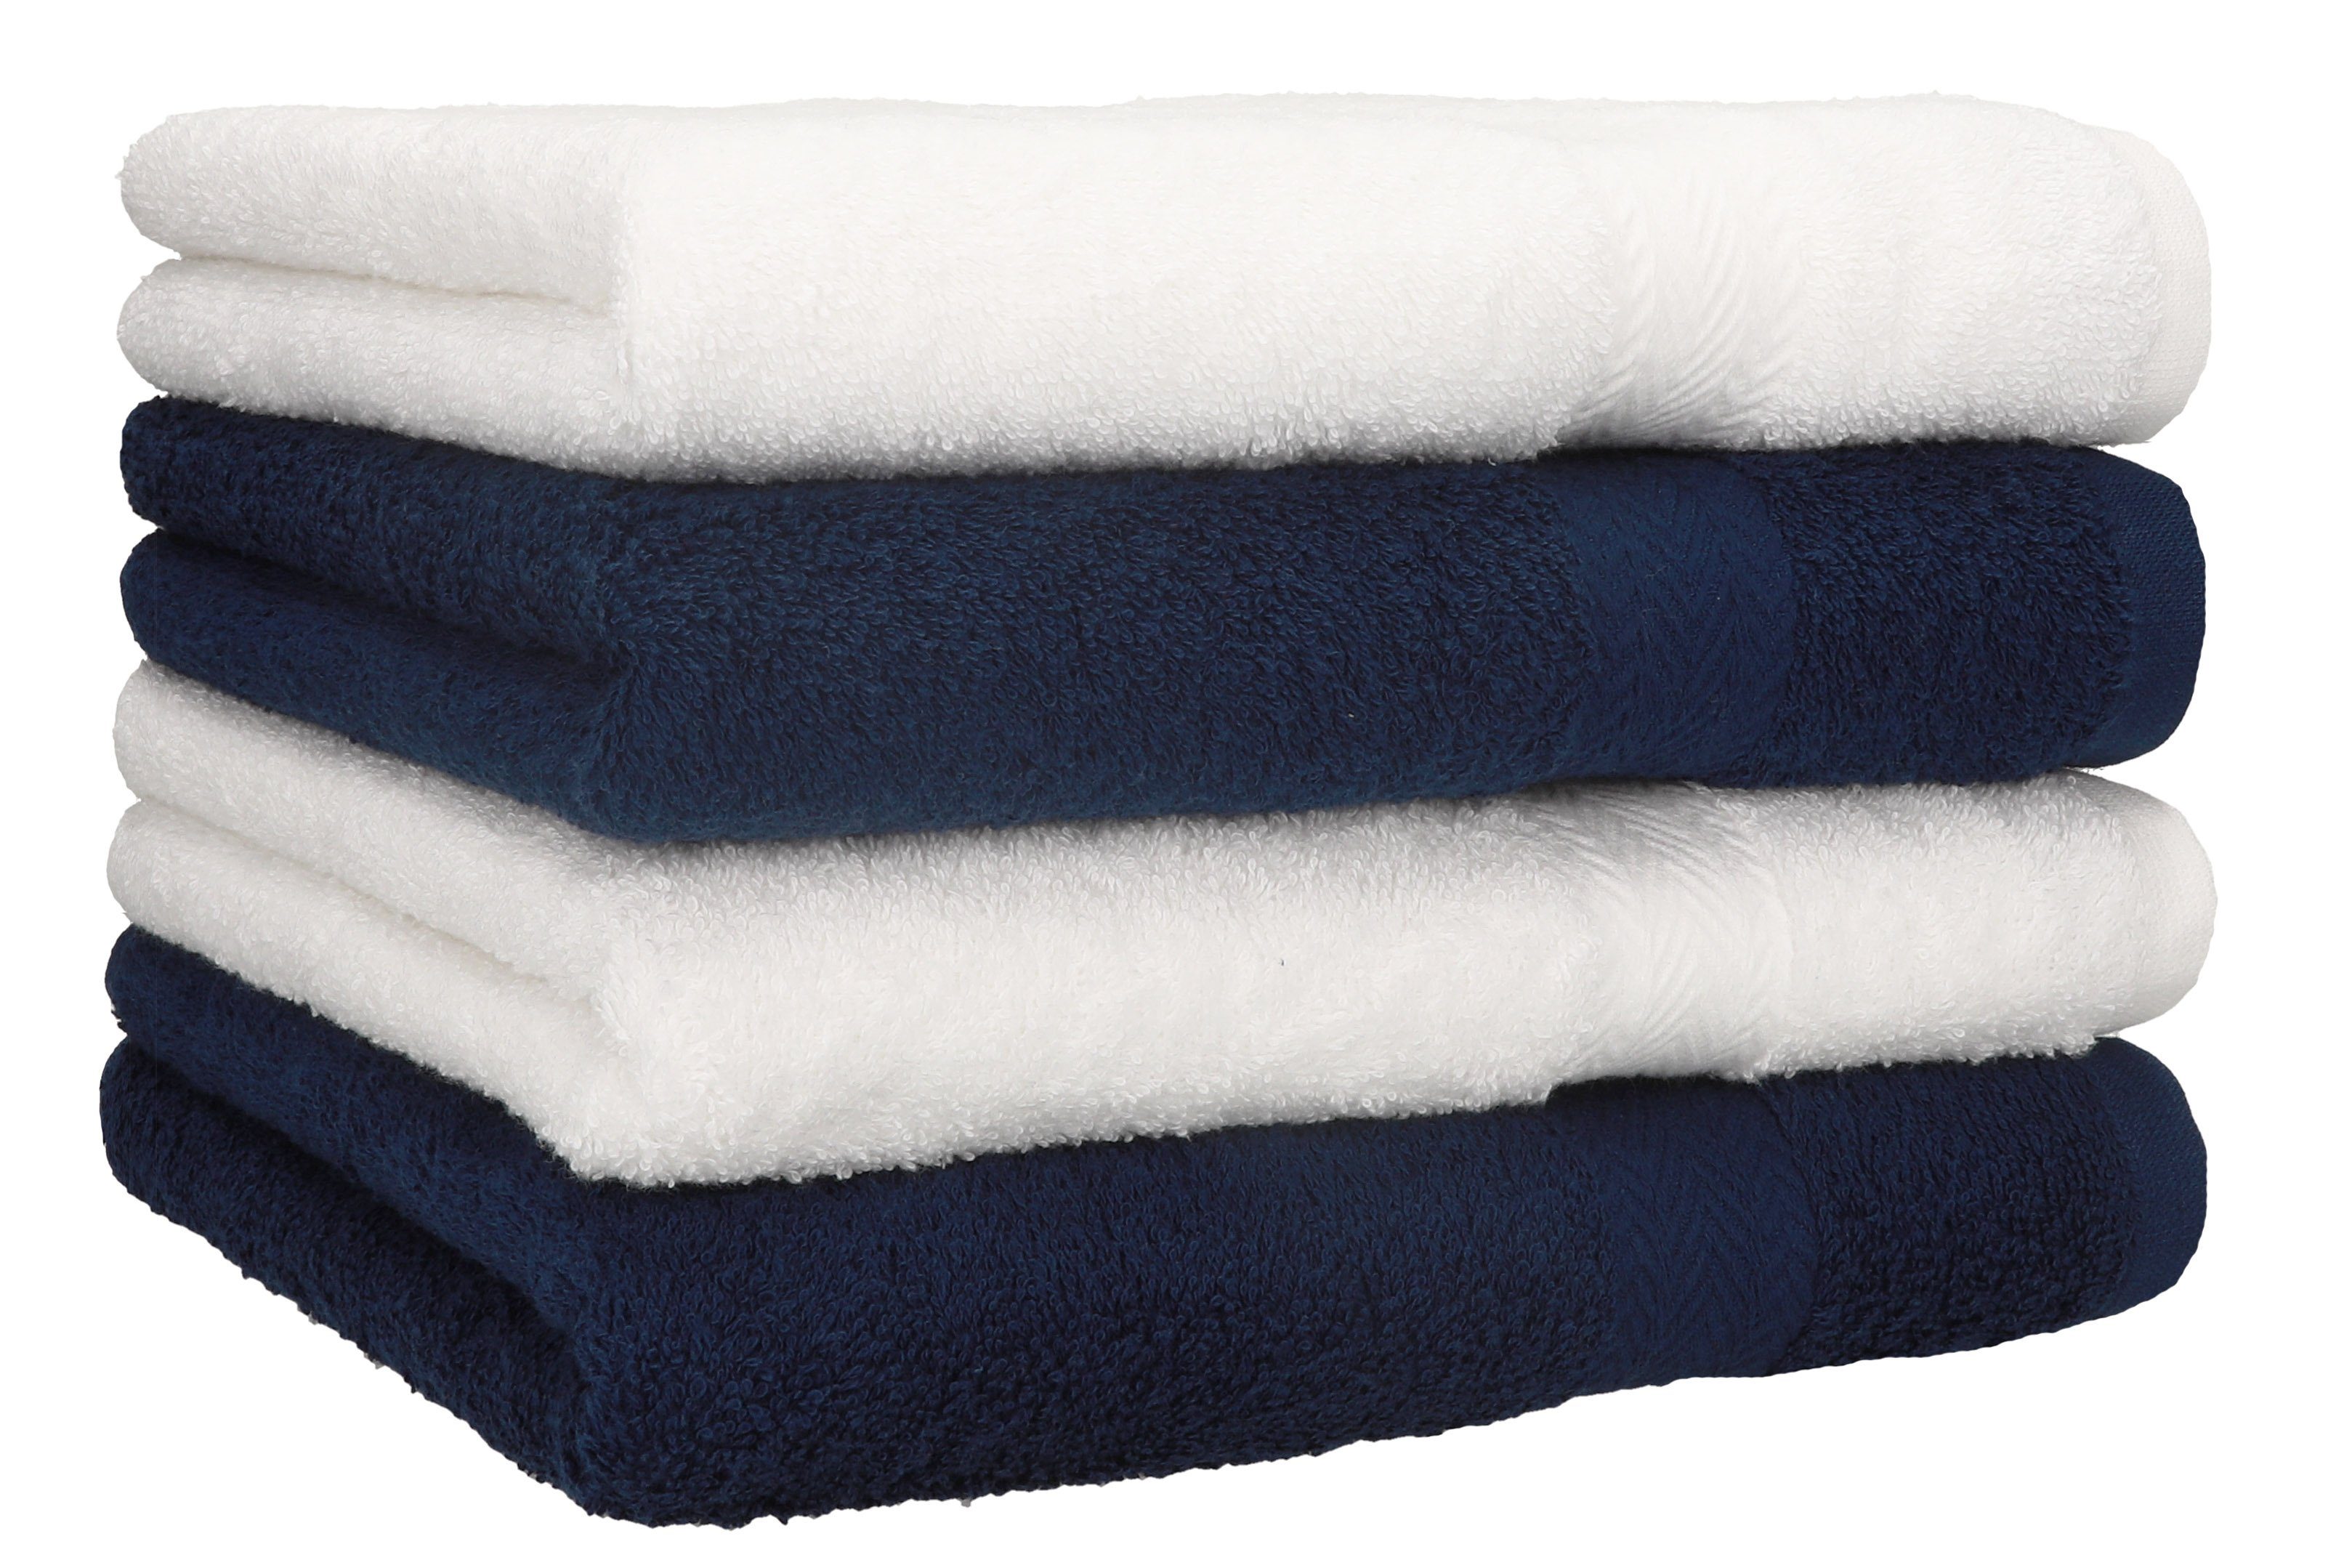 Betz Handtücher 4 Stück Handtücher Premium 4 Handtücher Farbe weiß und dunkelblau, 100% Baumwolle